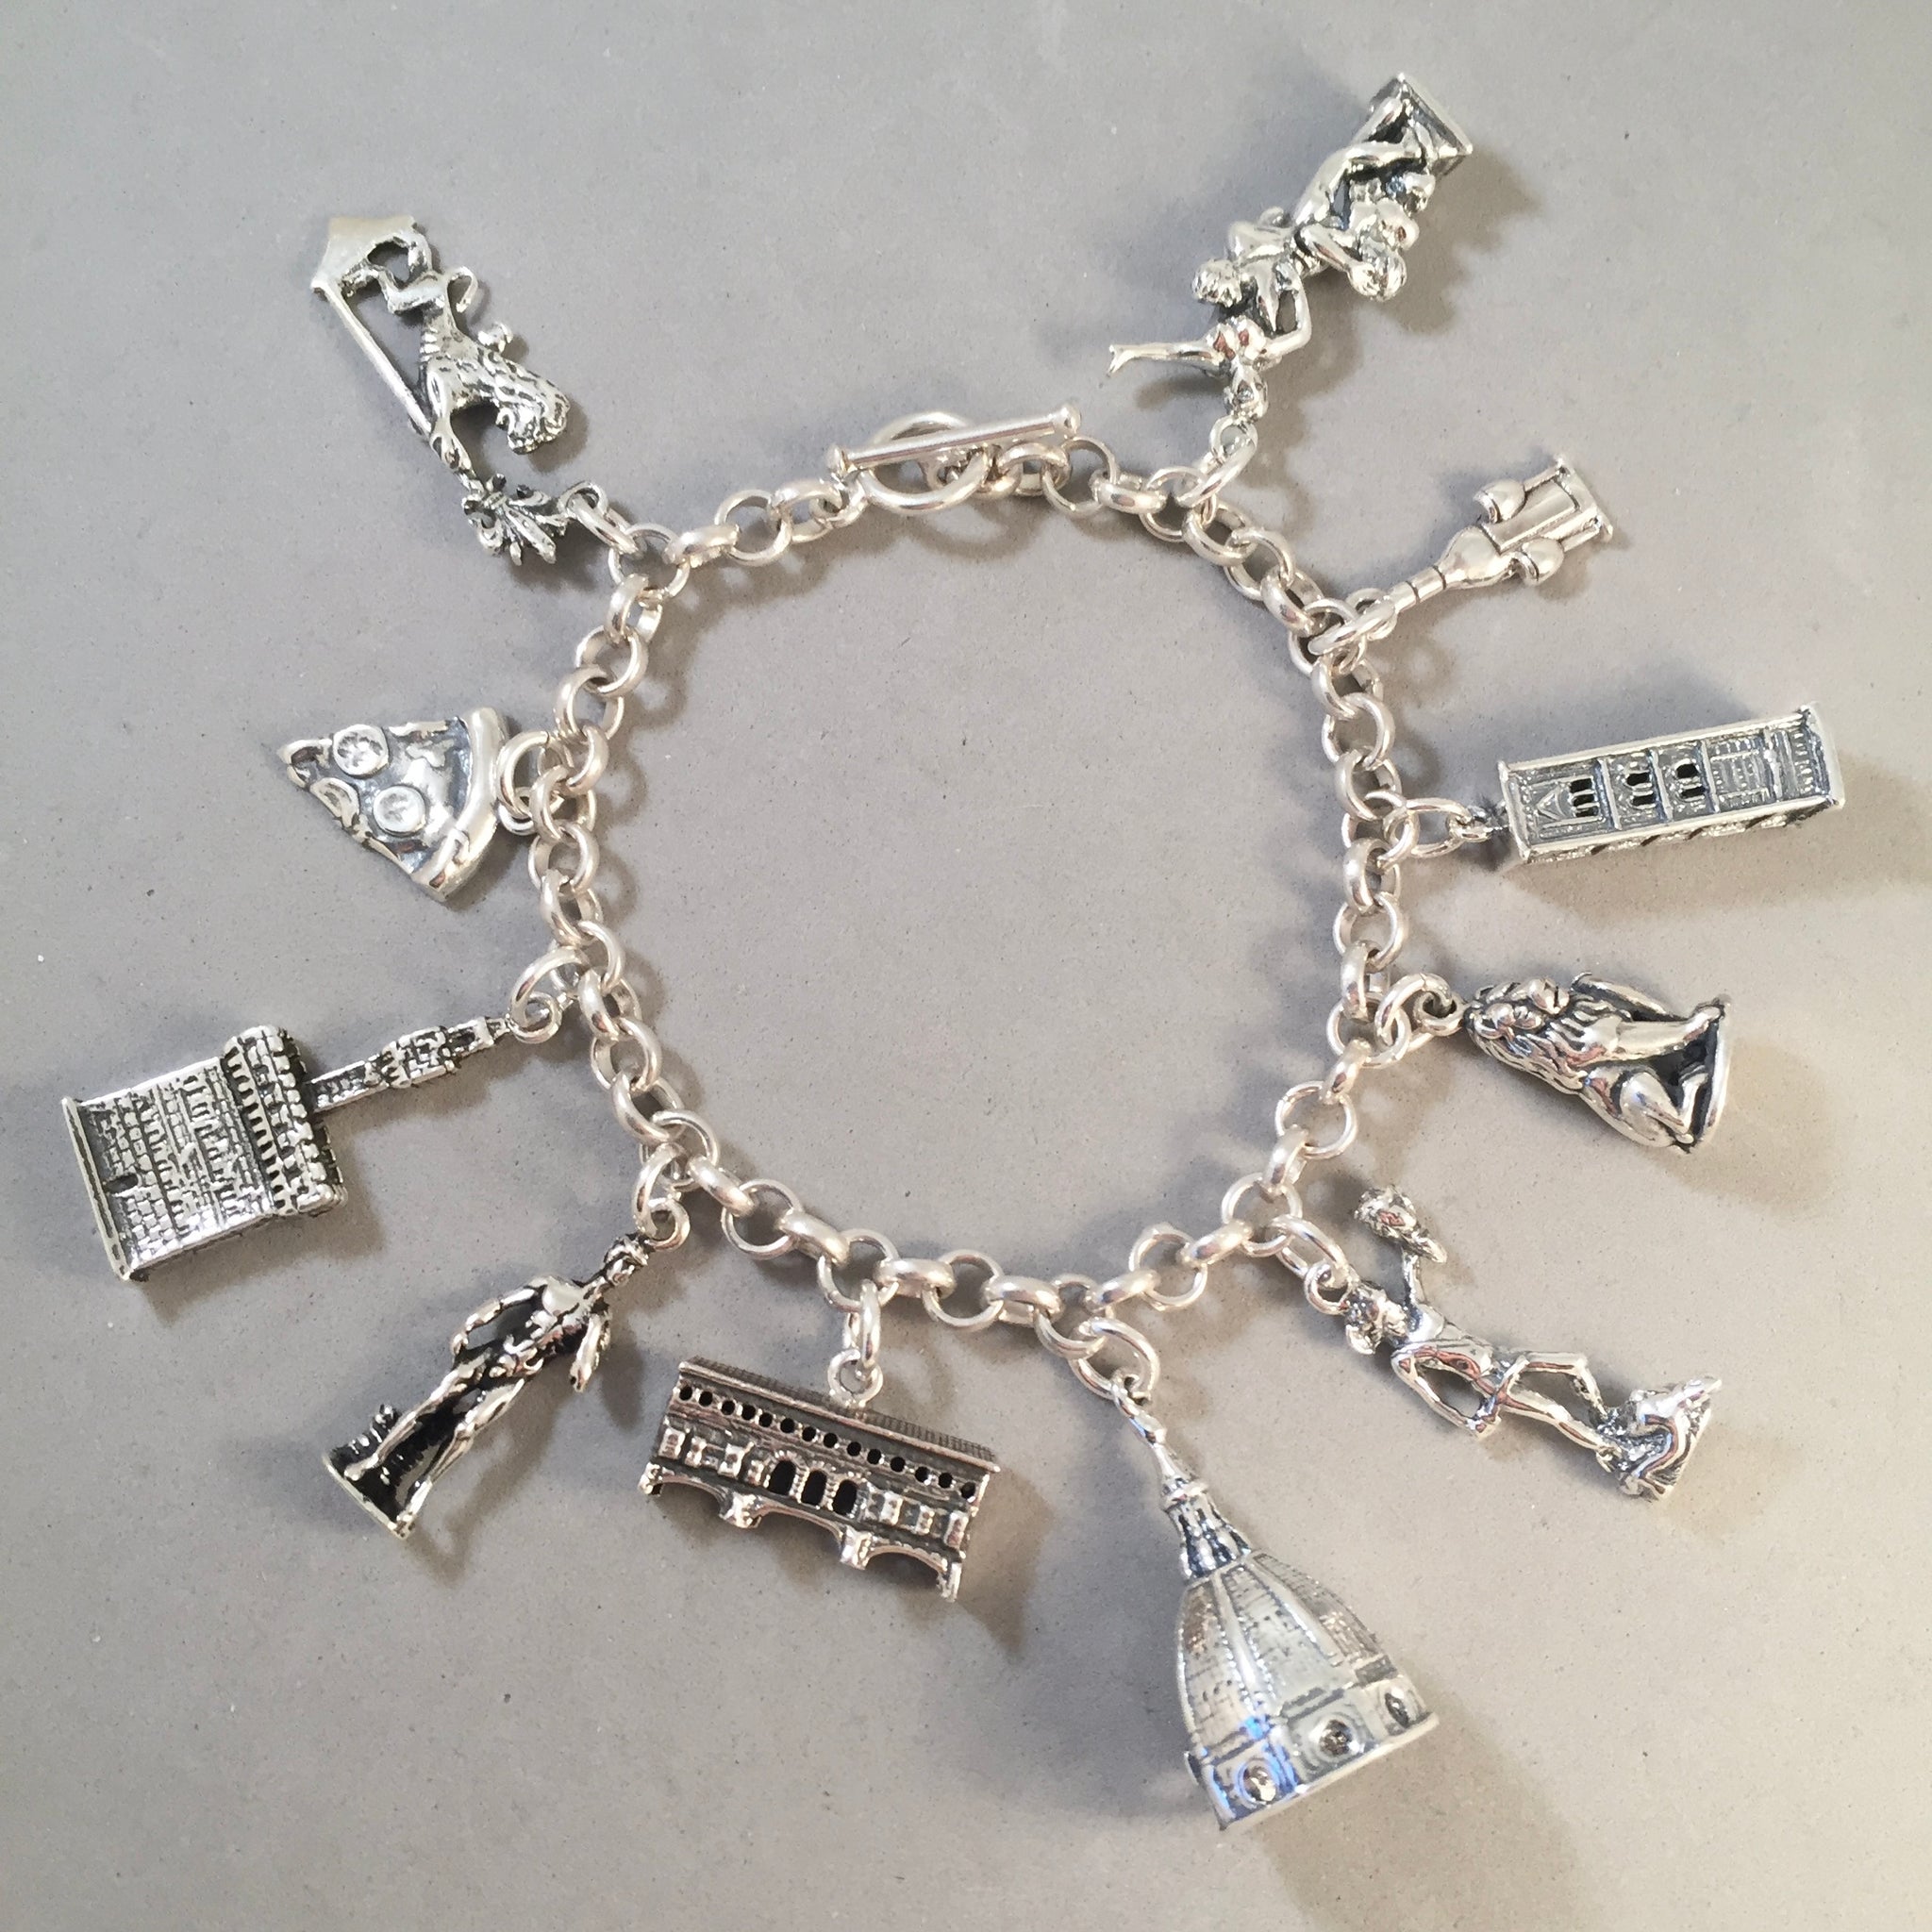 1950s Charm Bracelet | Chairish